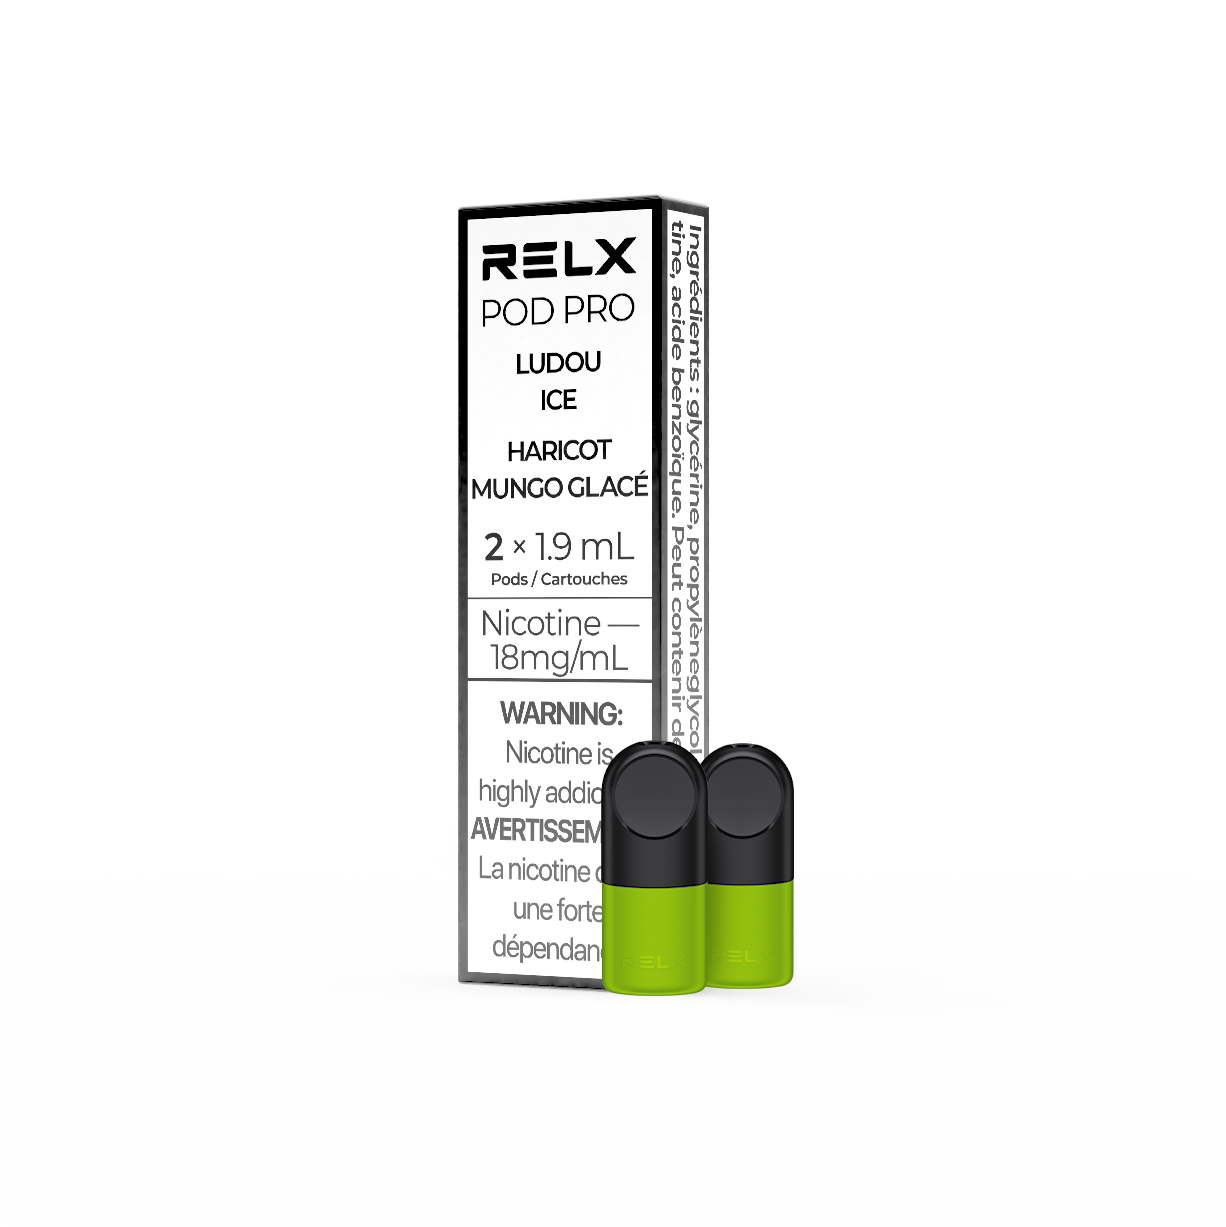 Relx Pro Pod - Ludou Ice